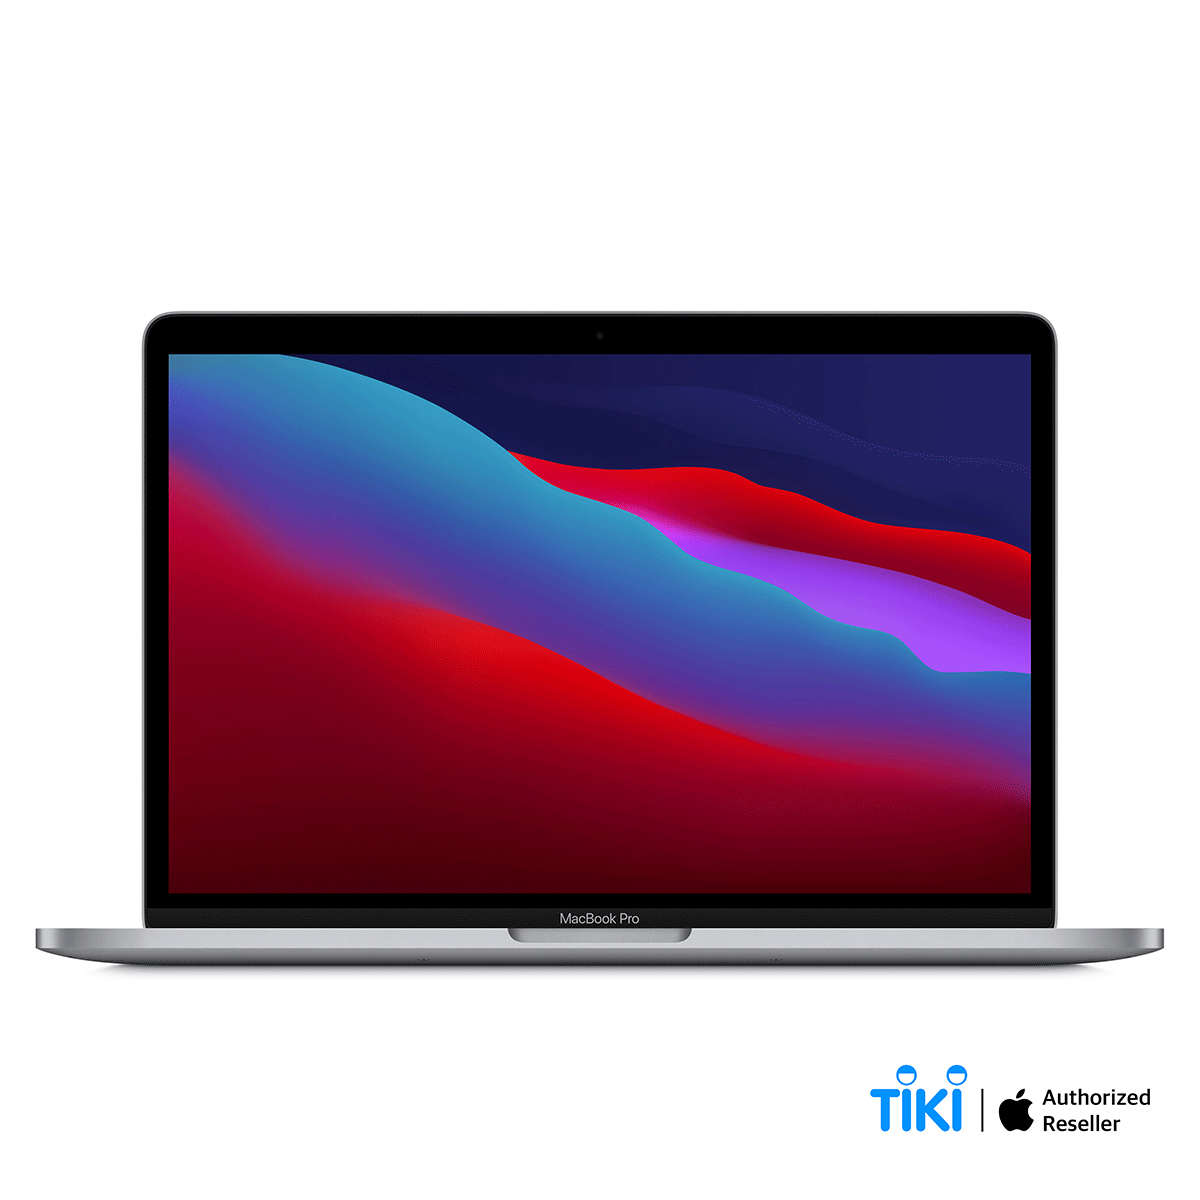 Apple MacBook Pro 2020 13 inch (Apple M1 - 8GB/ 256GB) - MYDA2SA/A